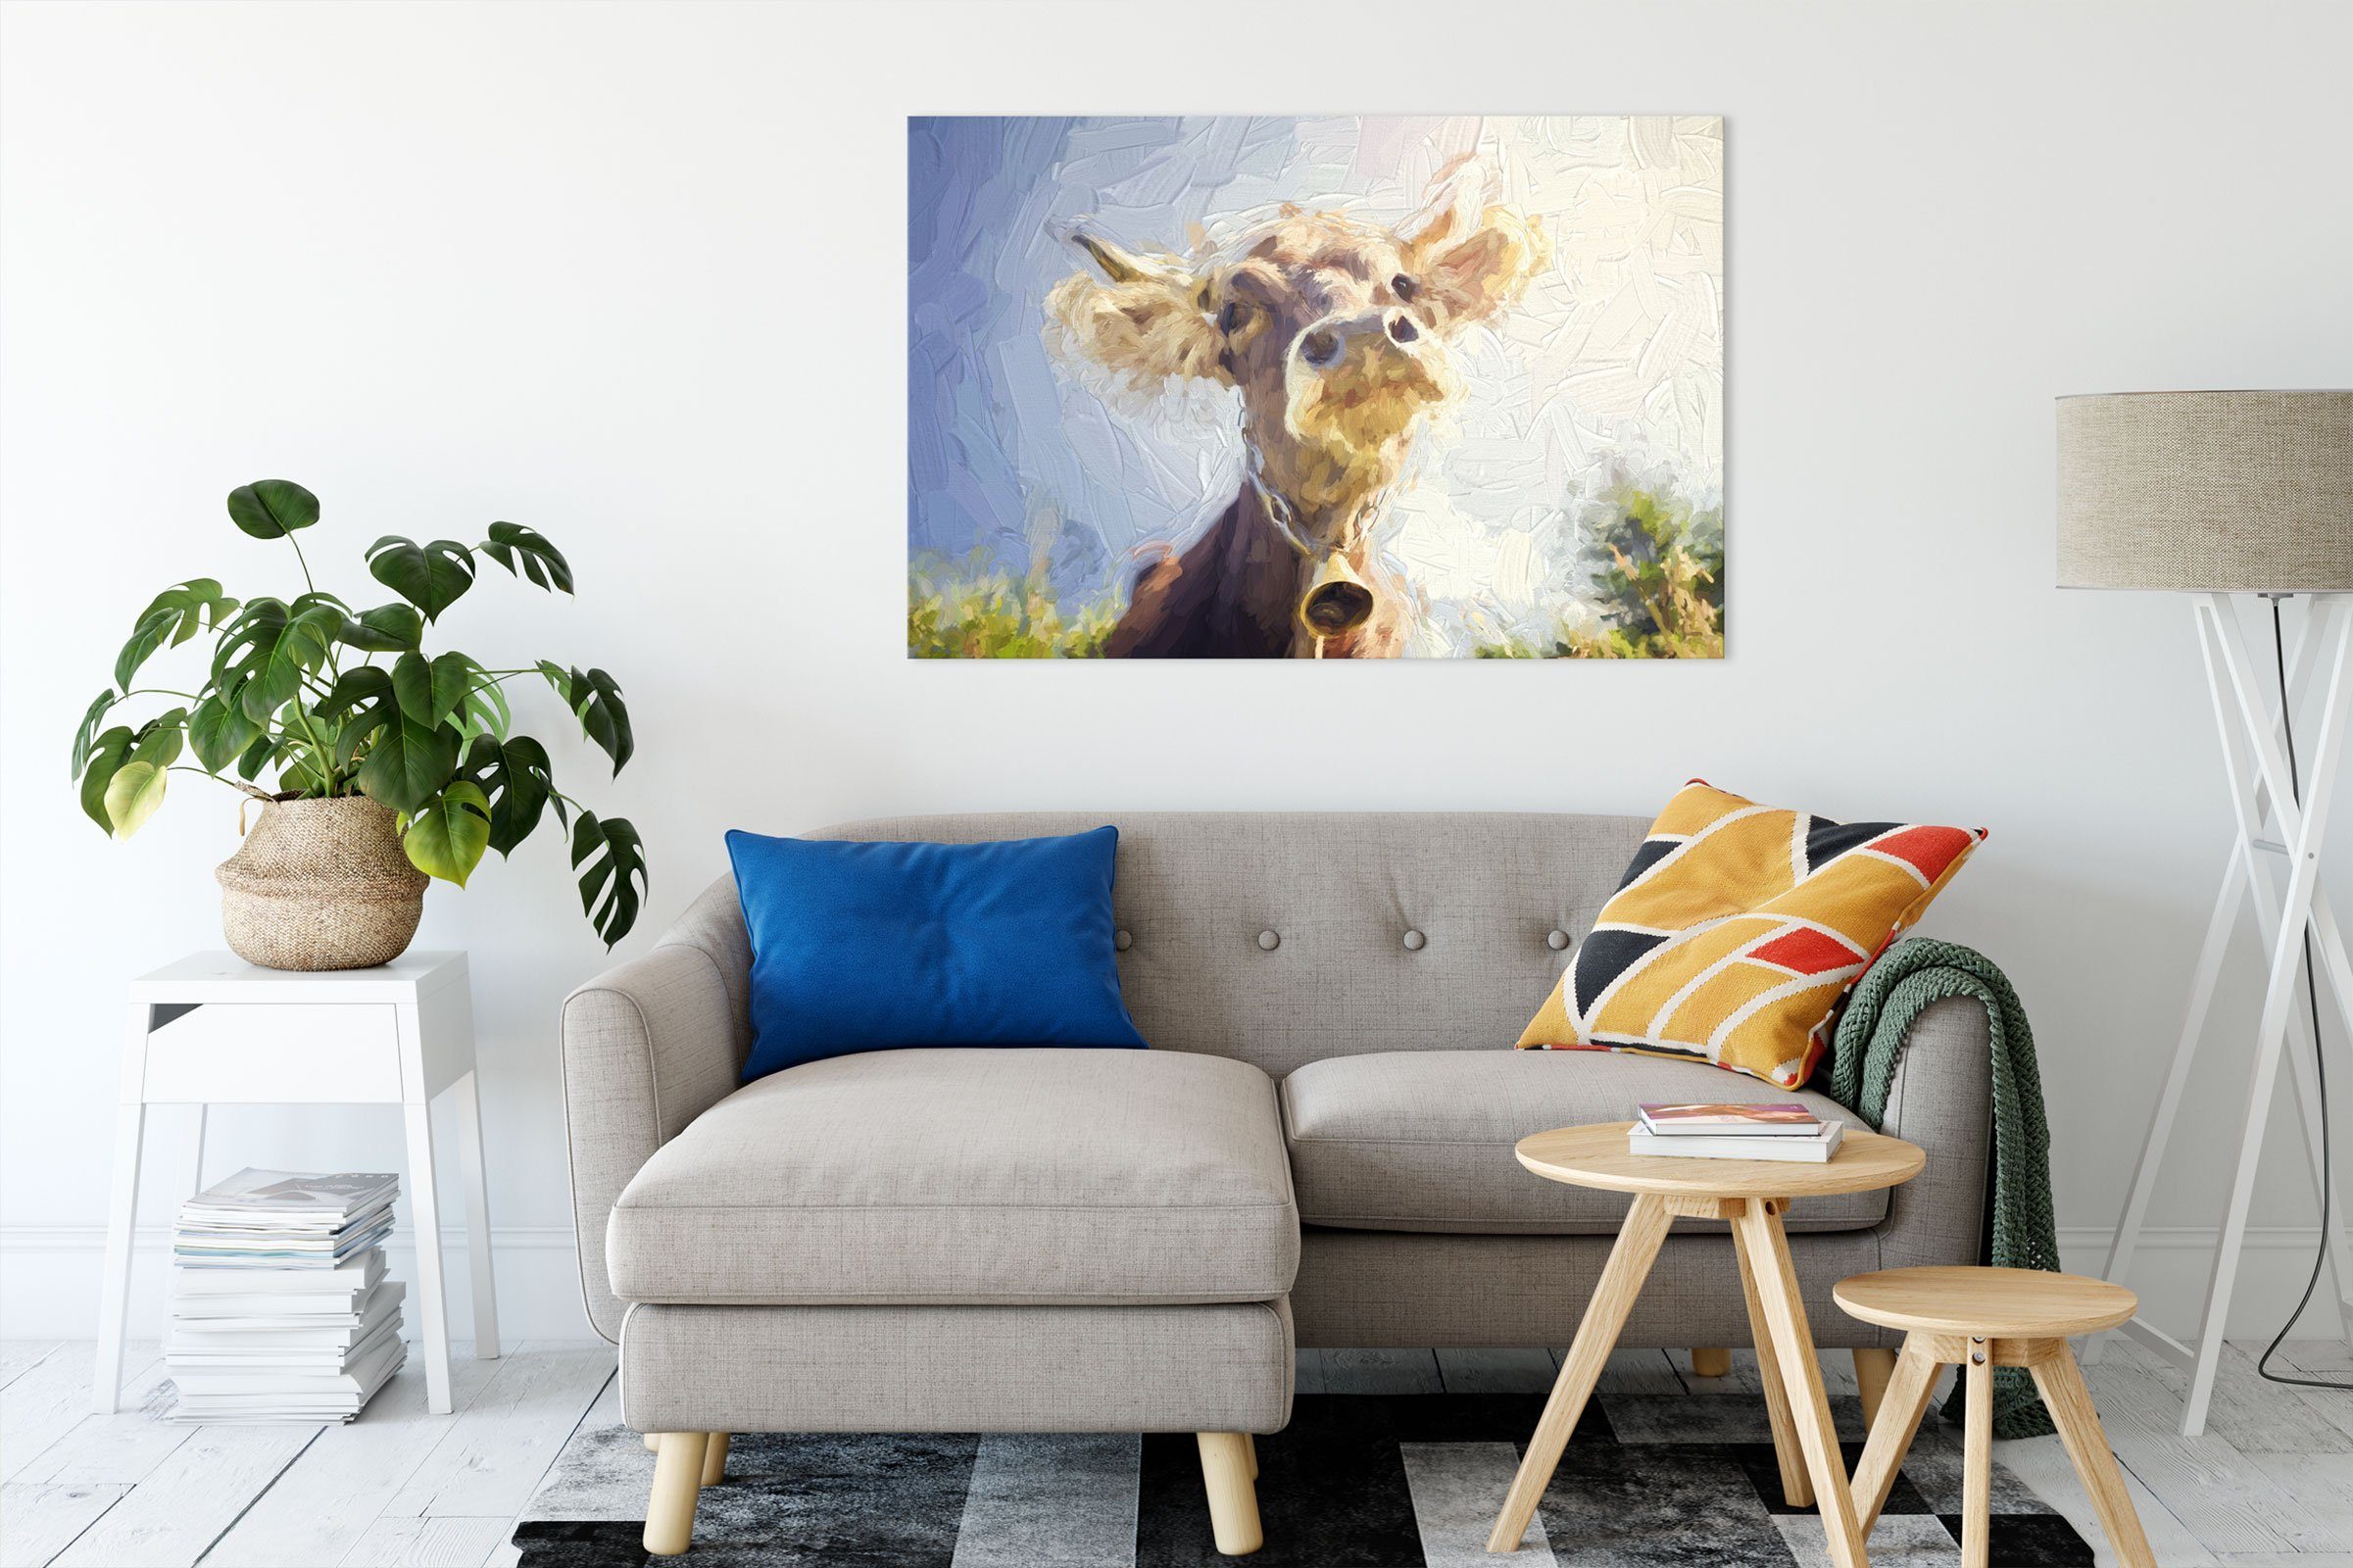 Pixxprint Leinwandbild Portrait einer Kuh fertig einer Zackenaufhänger bespannt, Leinwandbild Kuh, St), inkl. Portrait (1